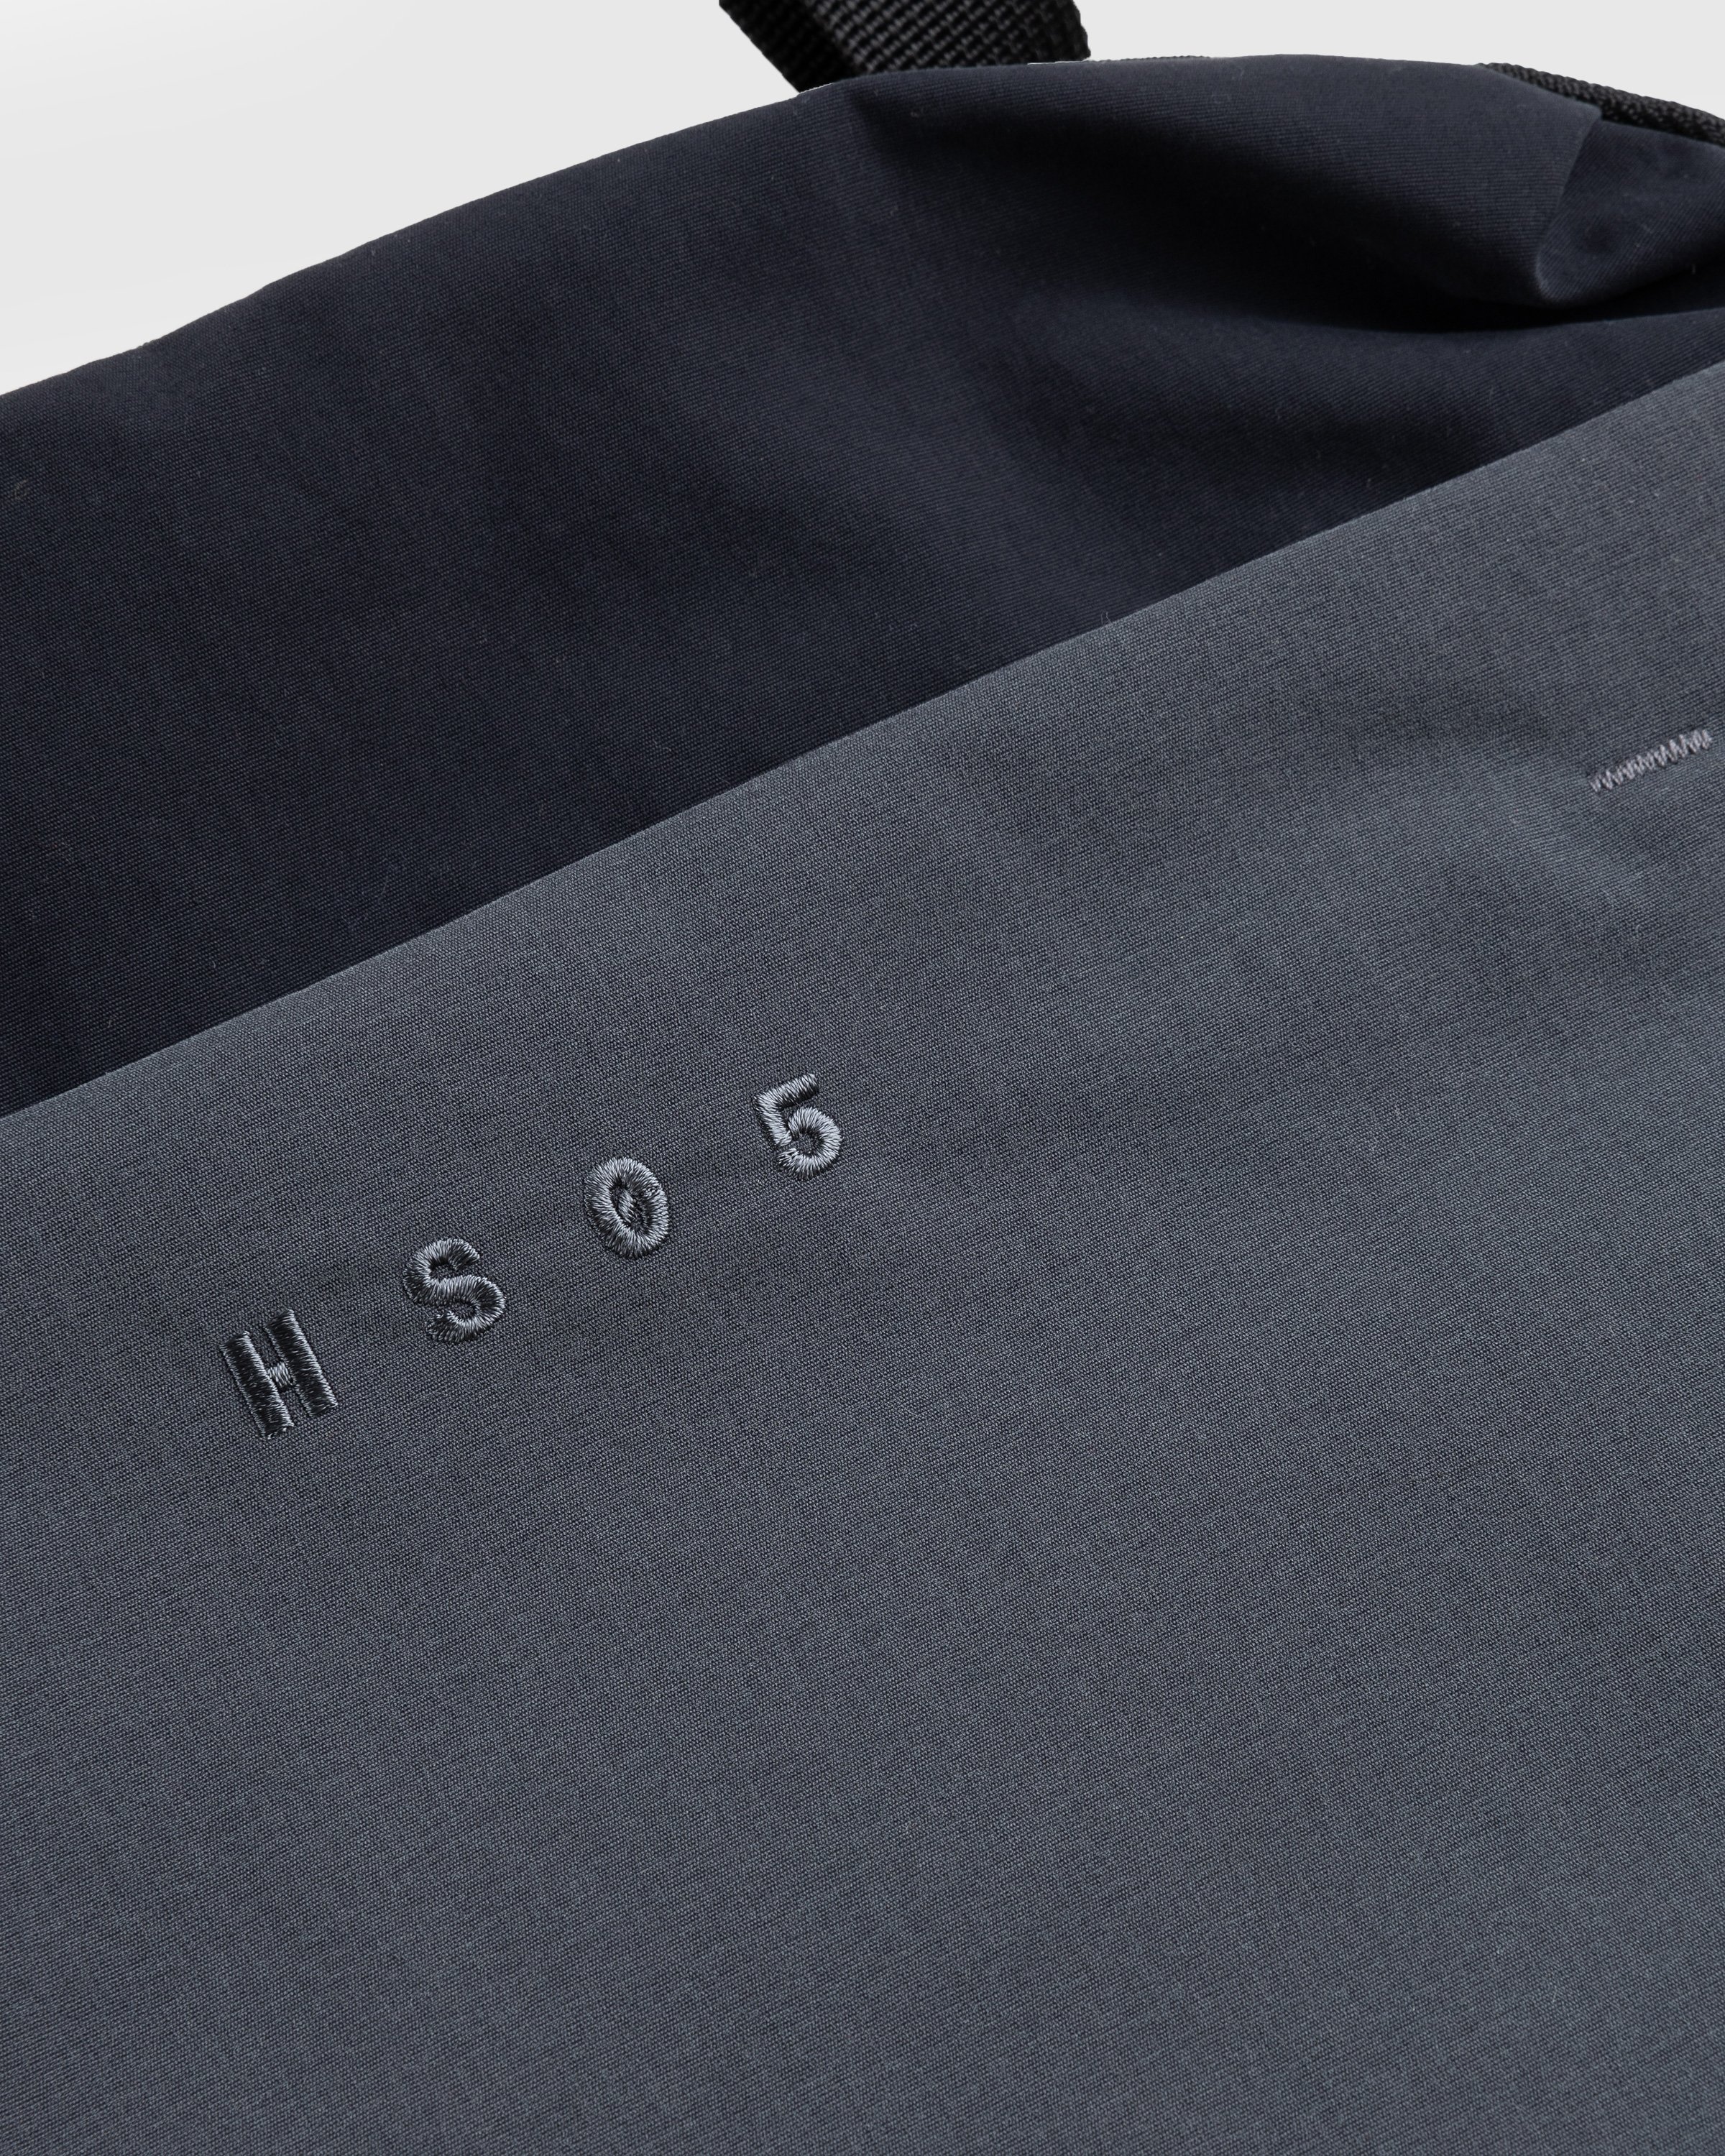 Highsnobiety HS05 - 3 Layer Nylon Side Bag Black - Accessories - Black - Image 5